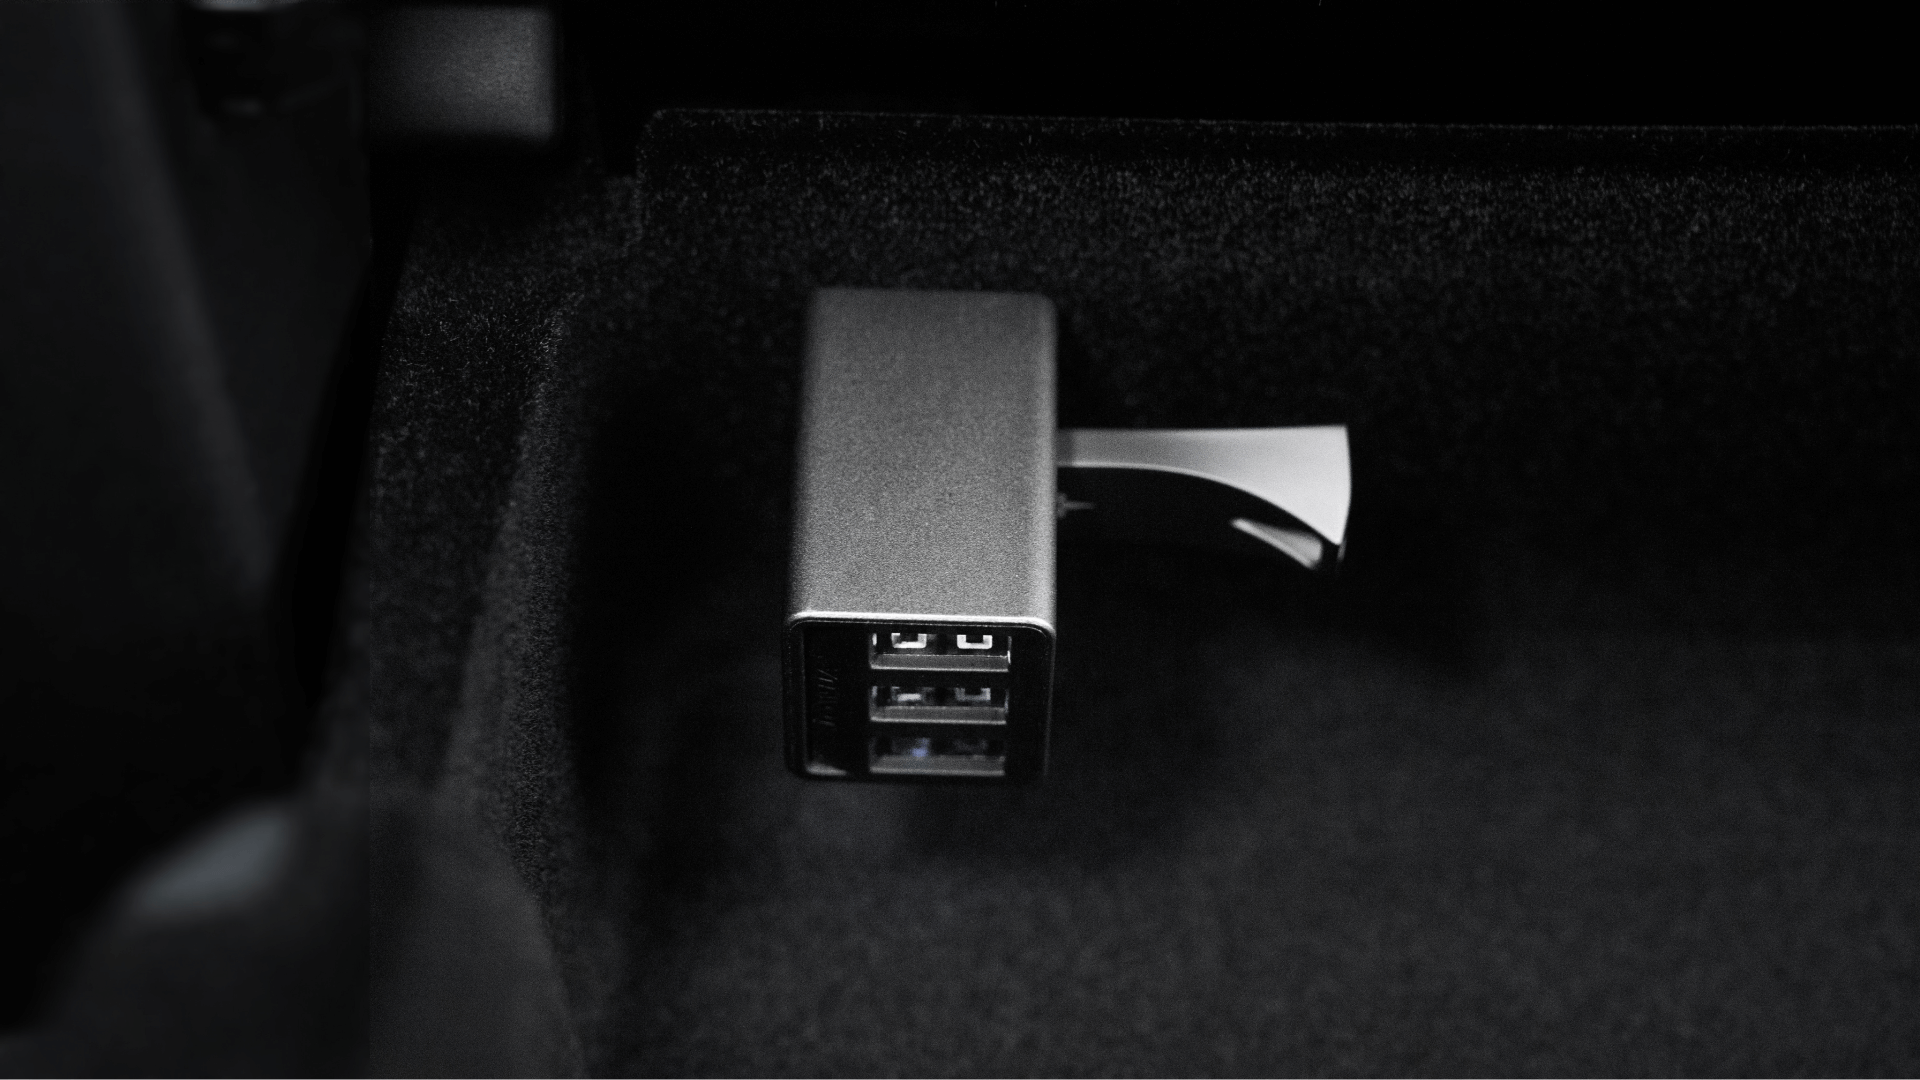 Tesla 4 Port USB Dashcam Hub for Model 3 / Y